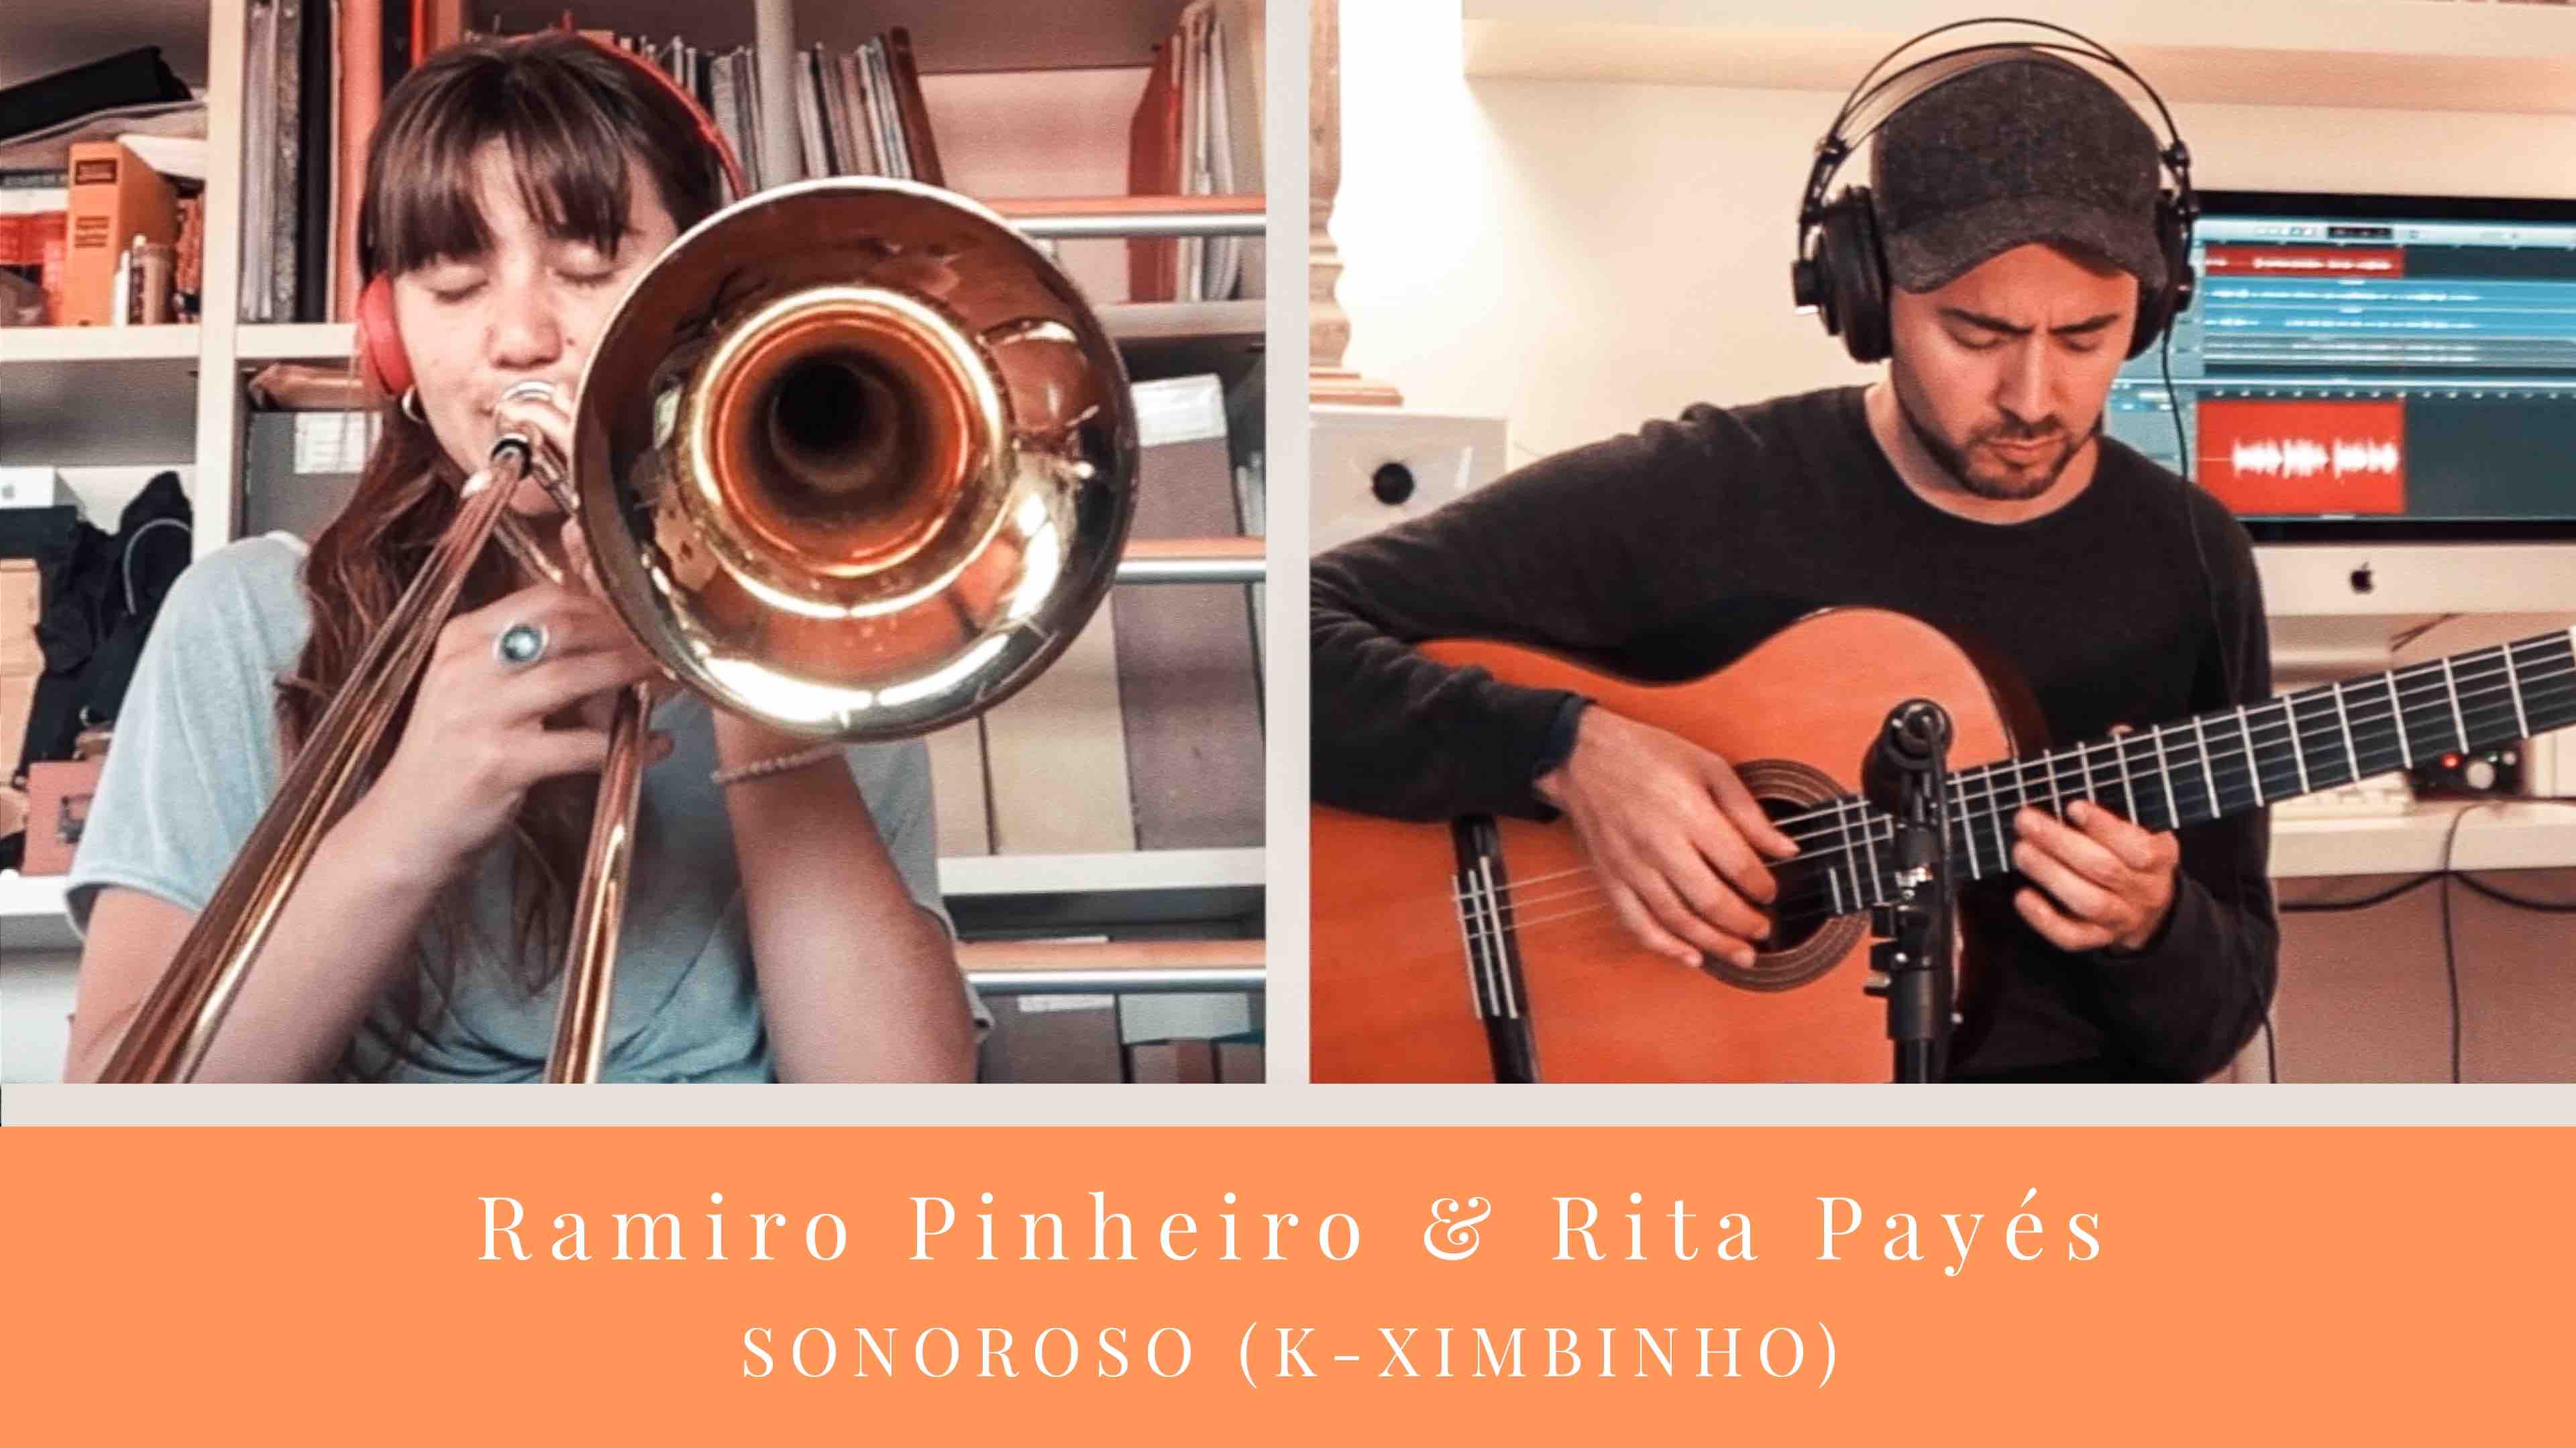 Rita Payés & Ramiro Pinheiro | Sonoroso (K-Ximbinho)